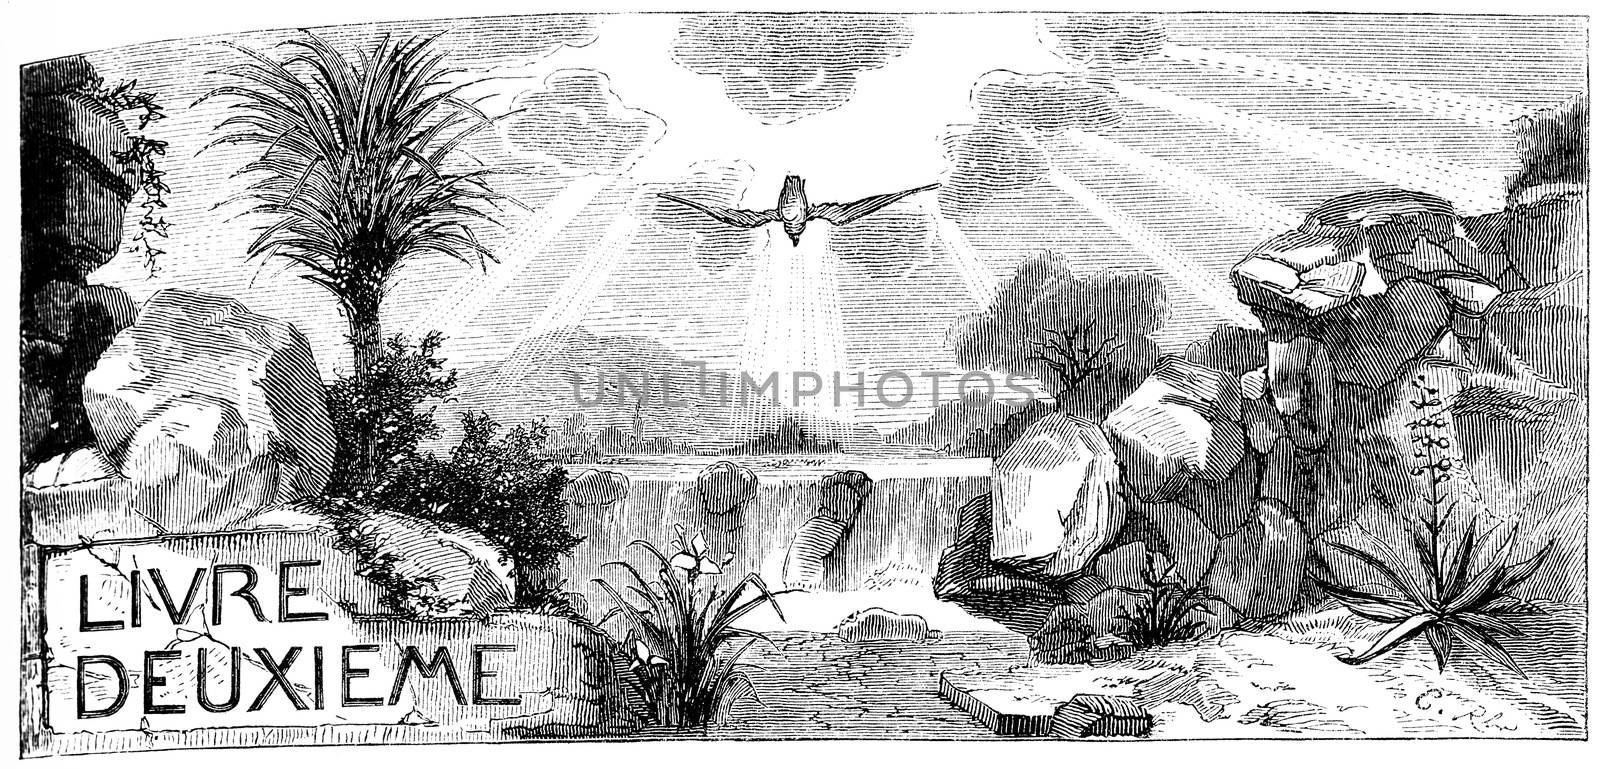 The baptism of Jesus Christ and the testimony of John the Baptist, vintage engraved illustration.
